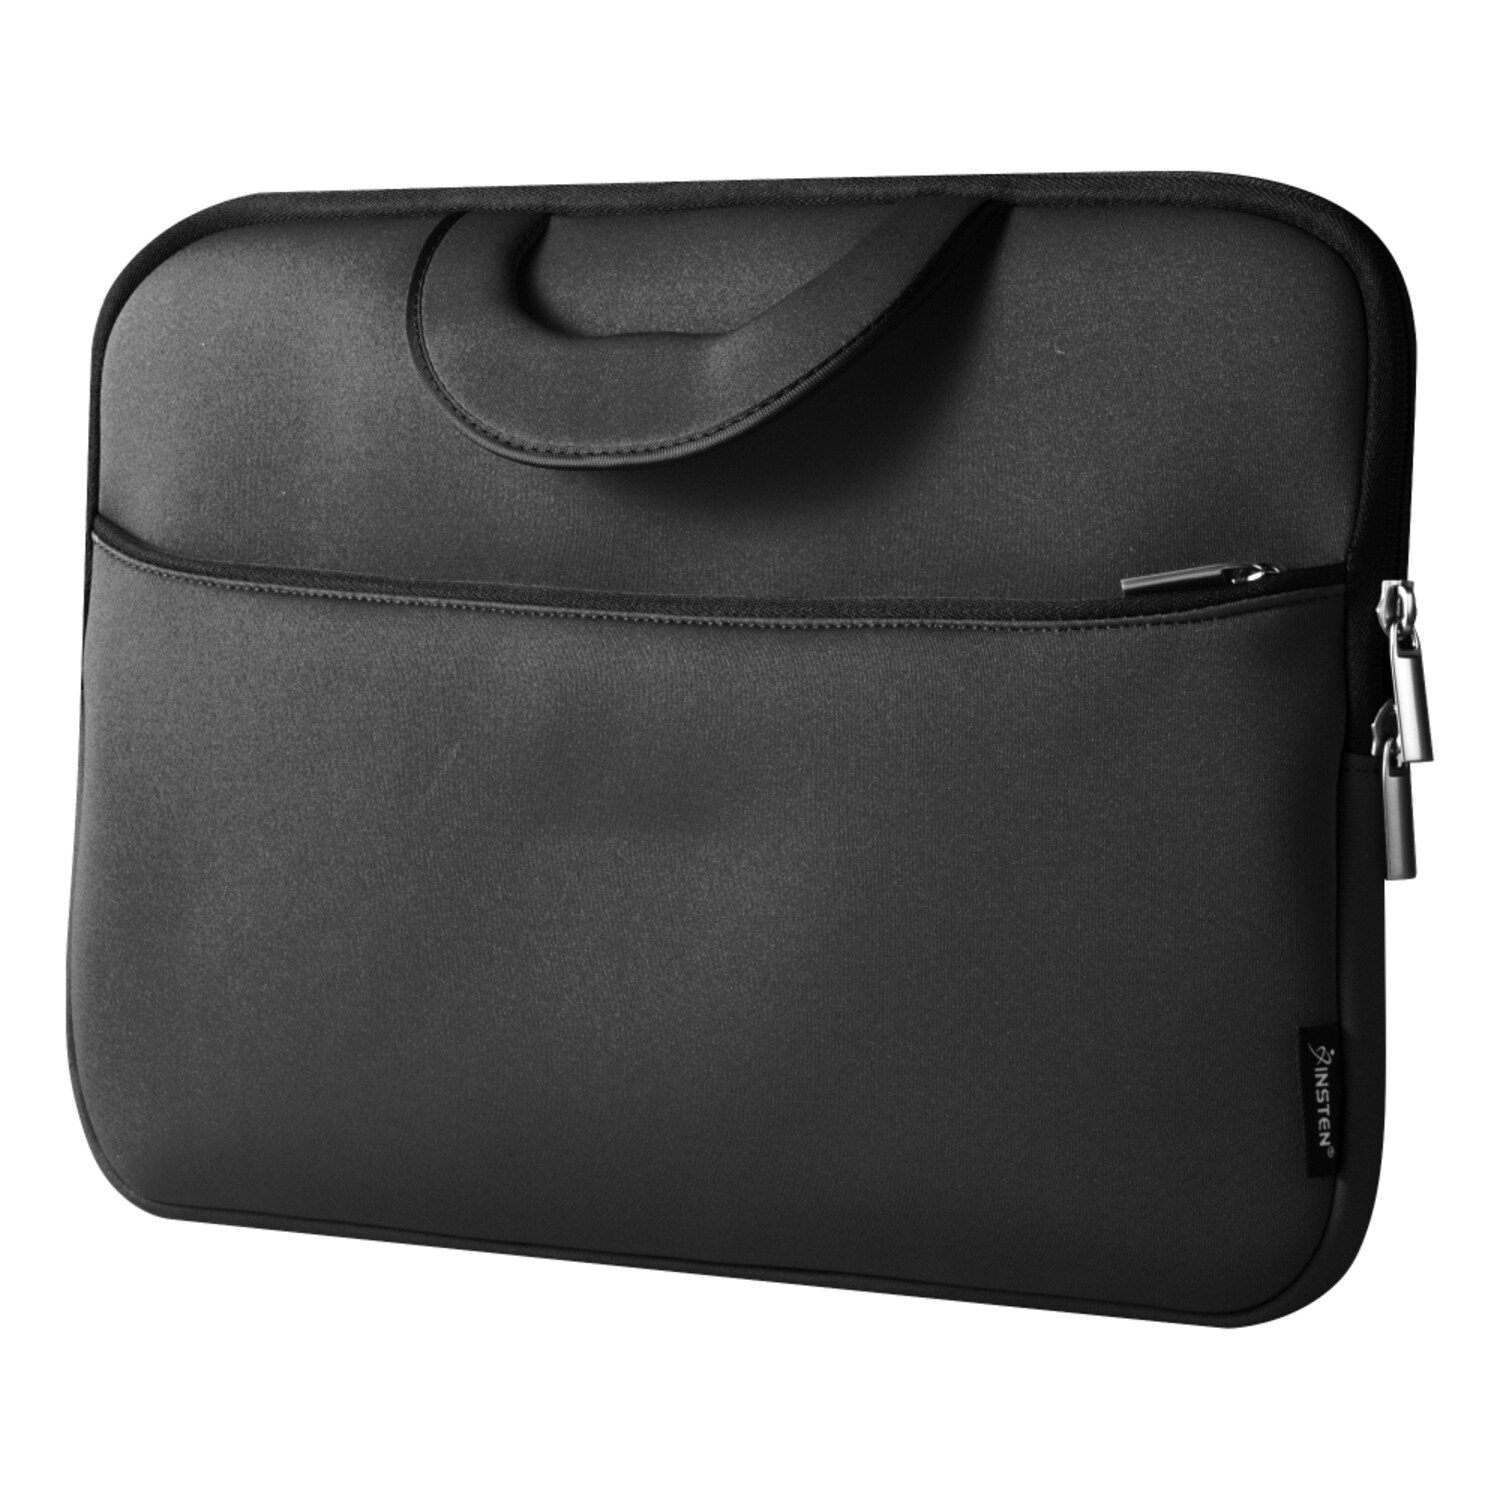 macbook carry bag